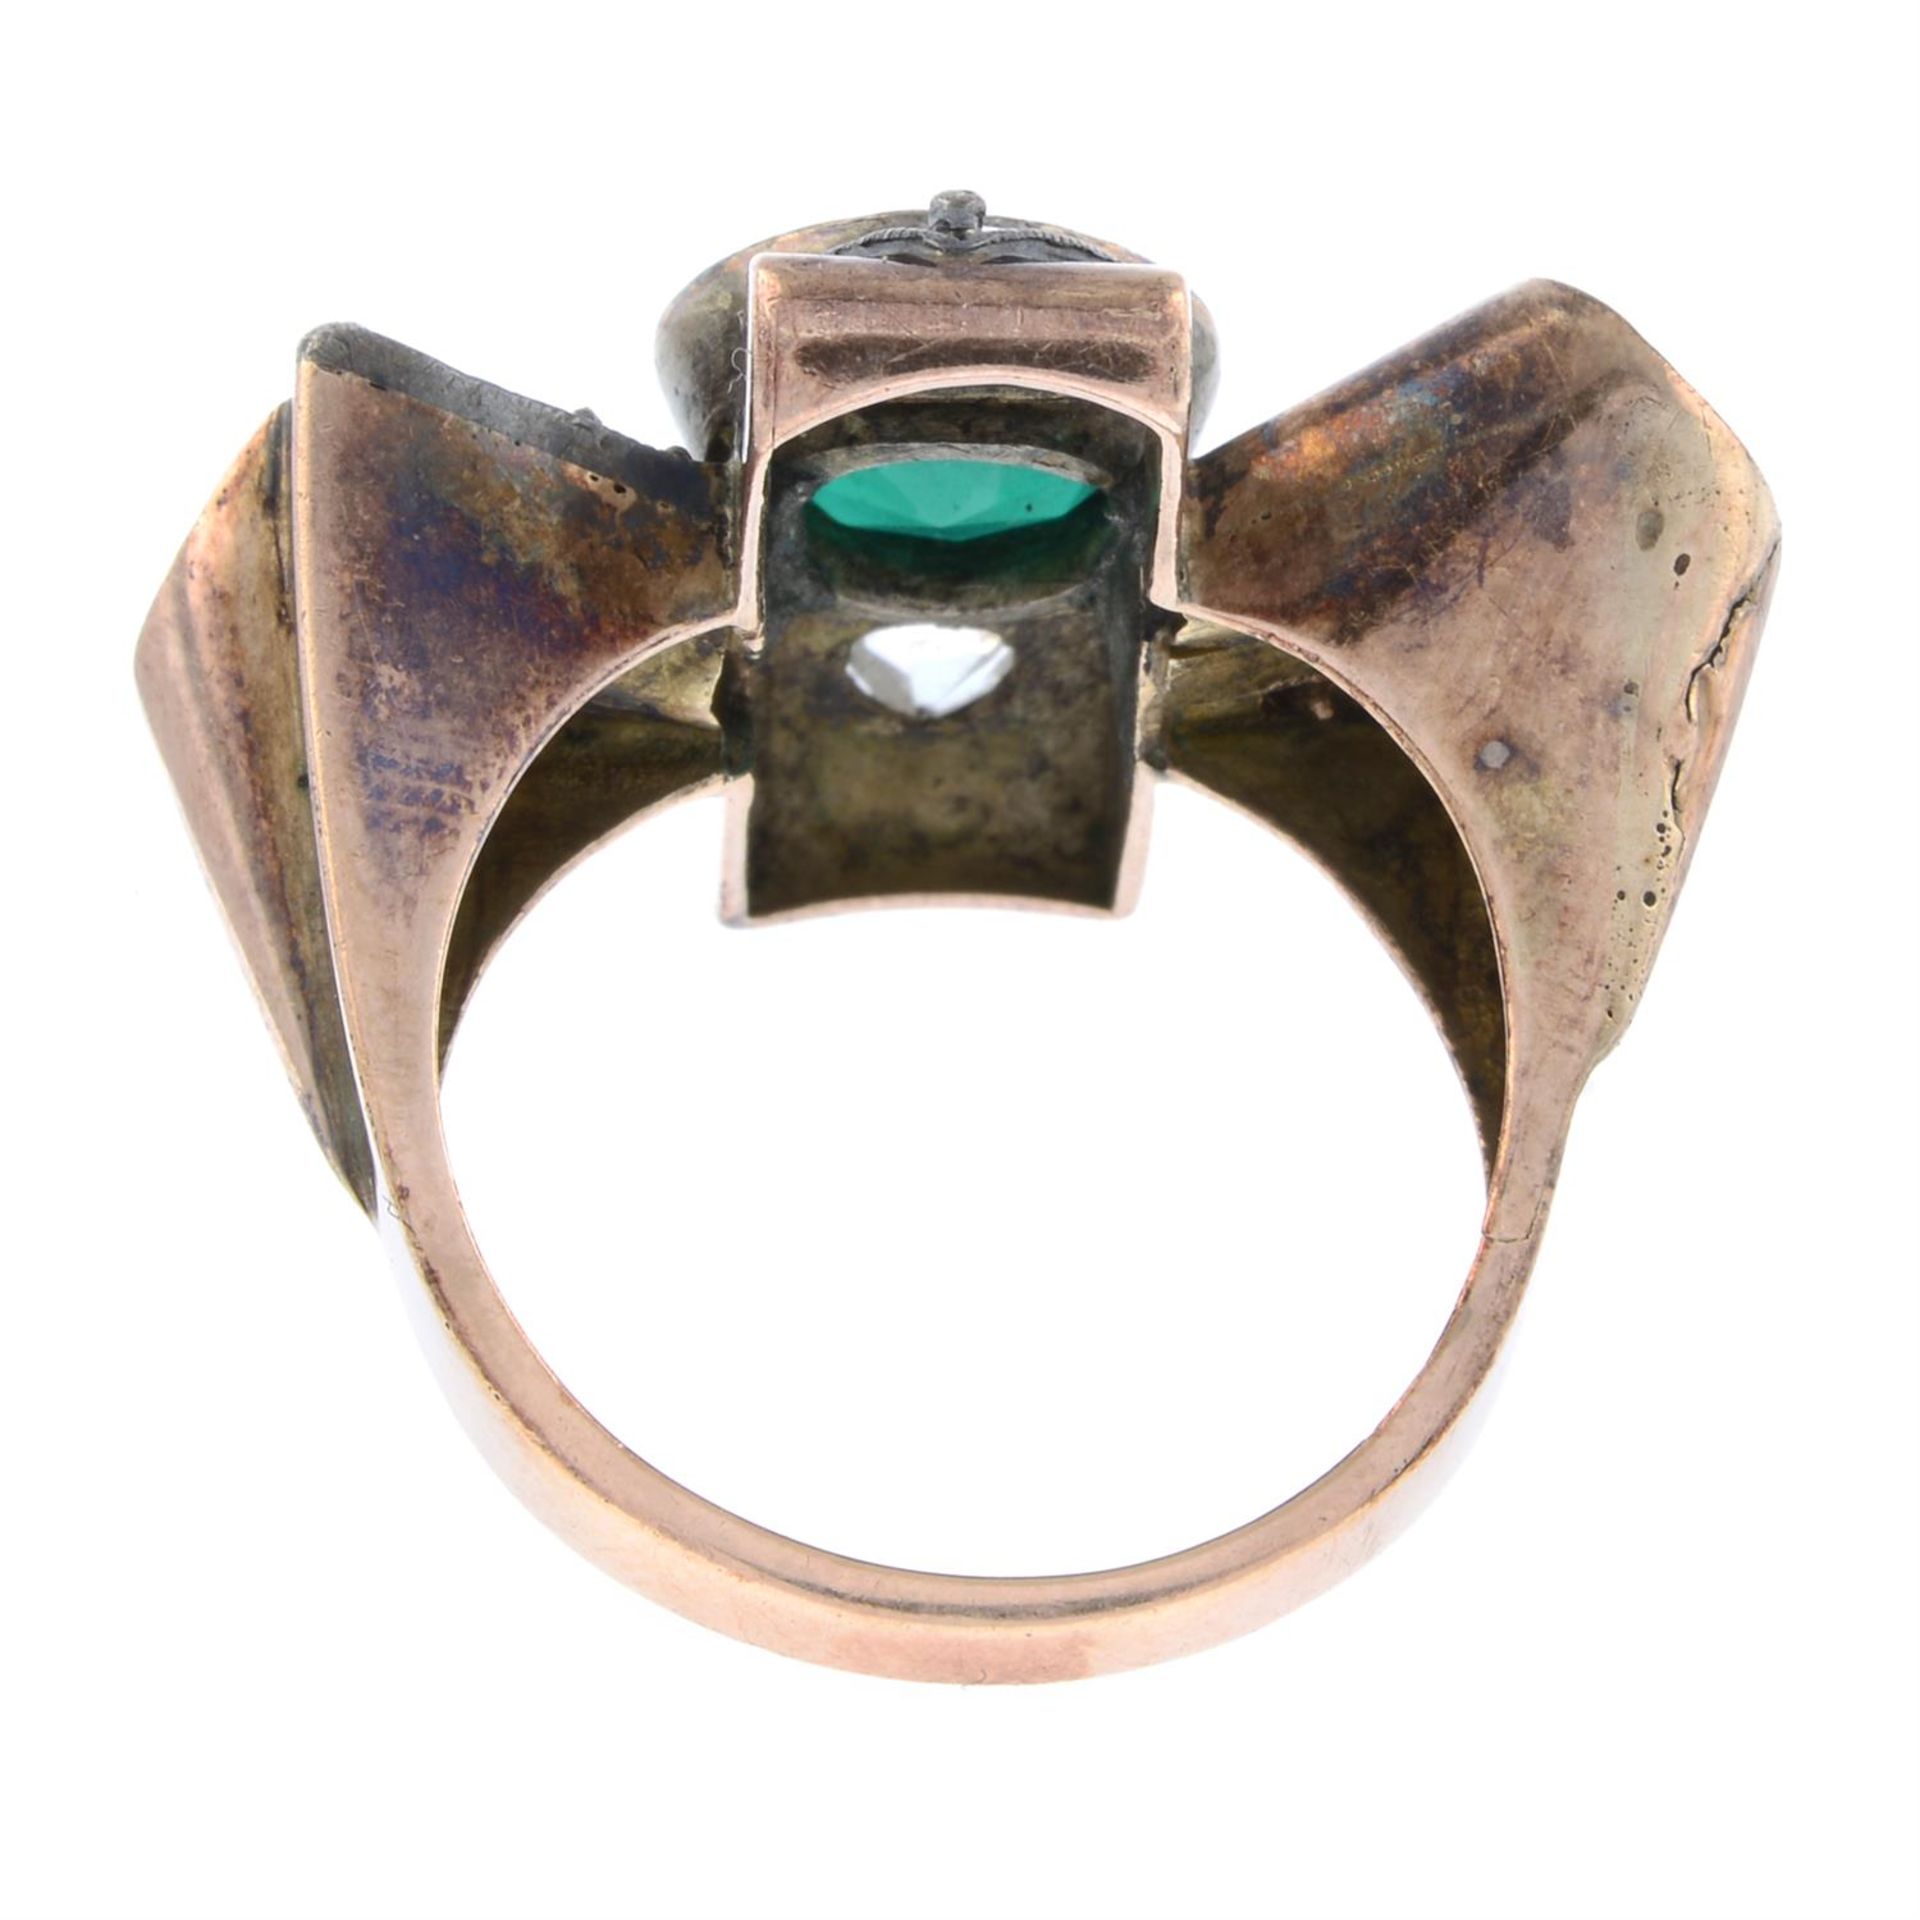 Mid 20th century diamond & paste dress ring - Image 2 of 2